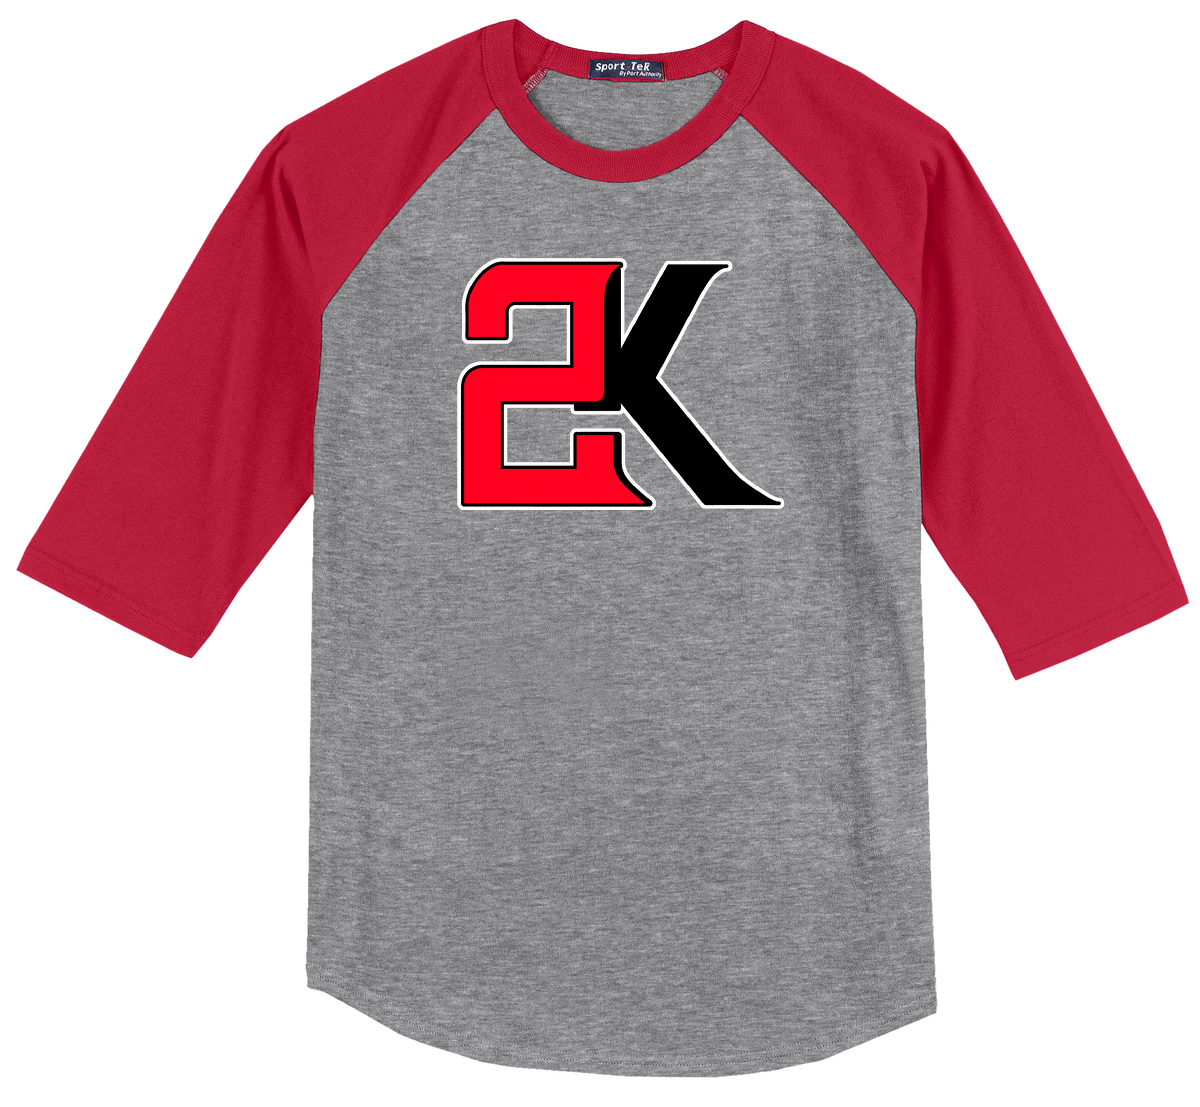 2K Softball 3/4 Sleeve Baseball Shirt